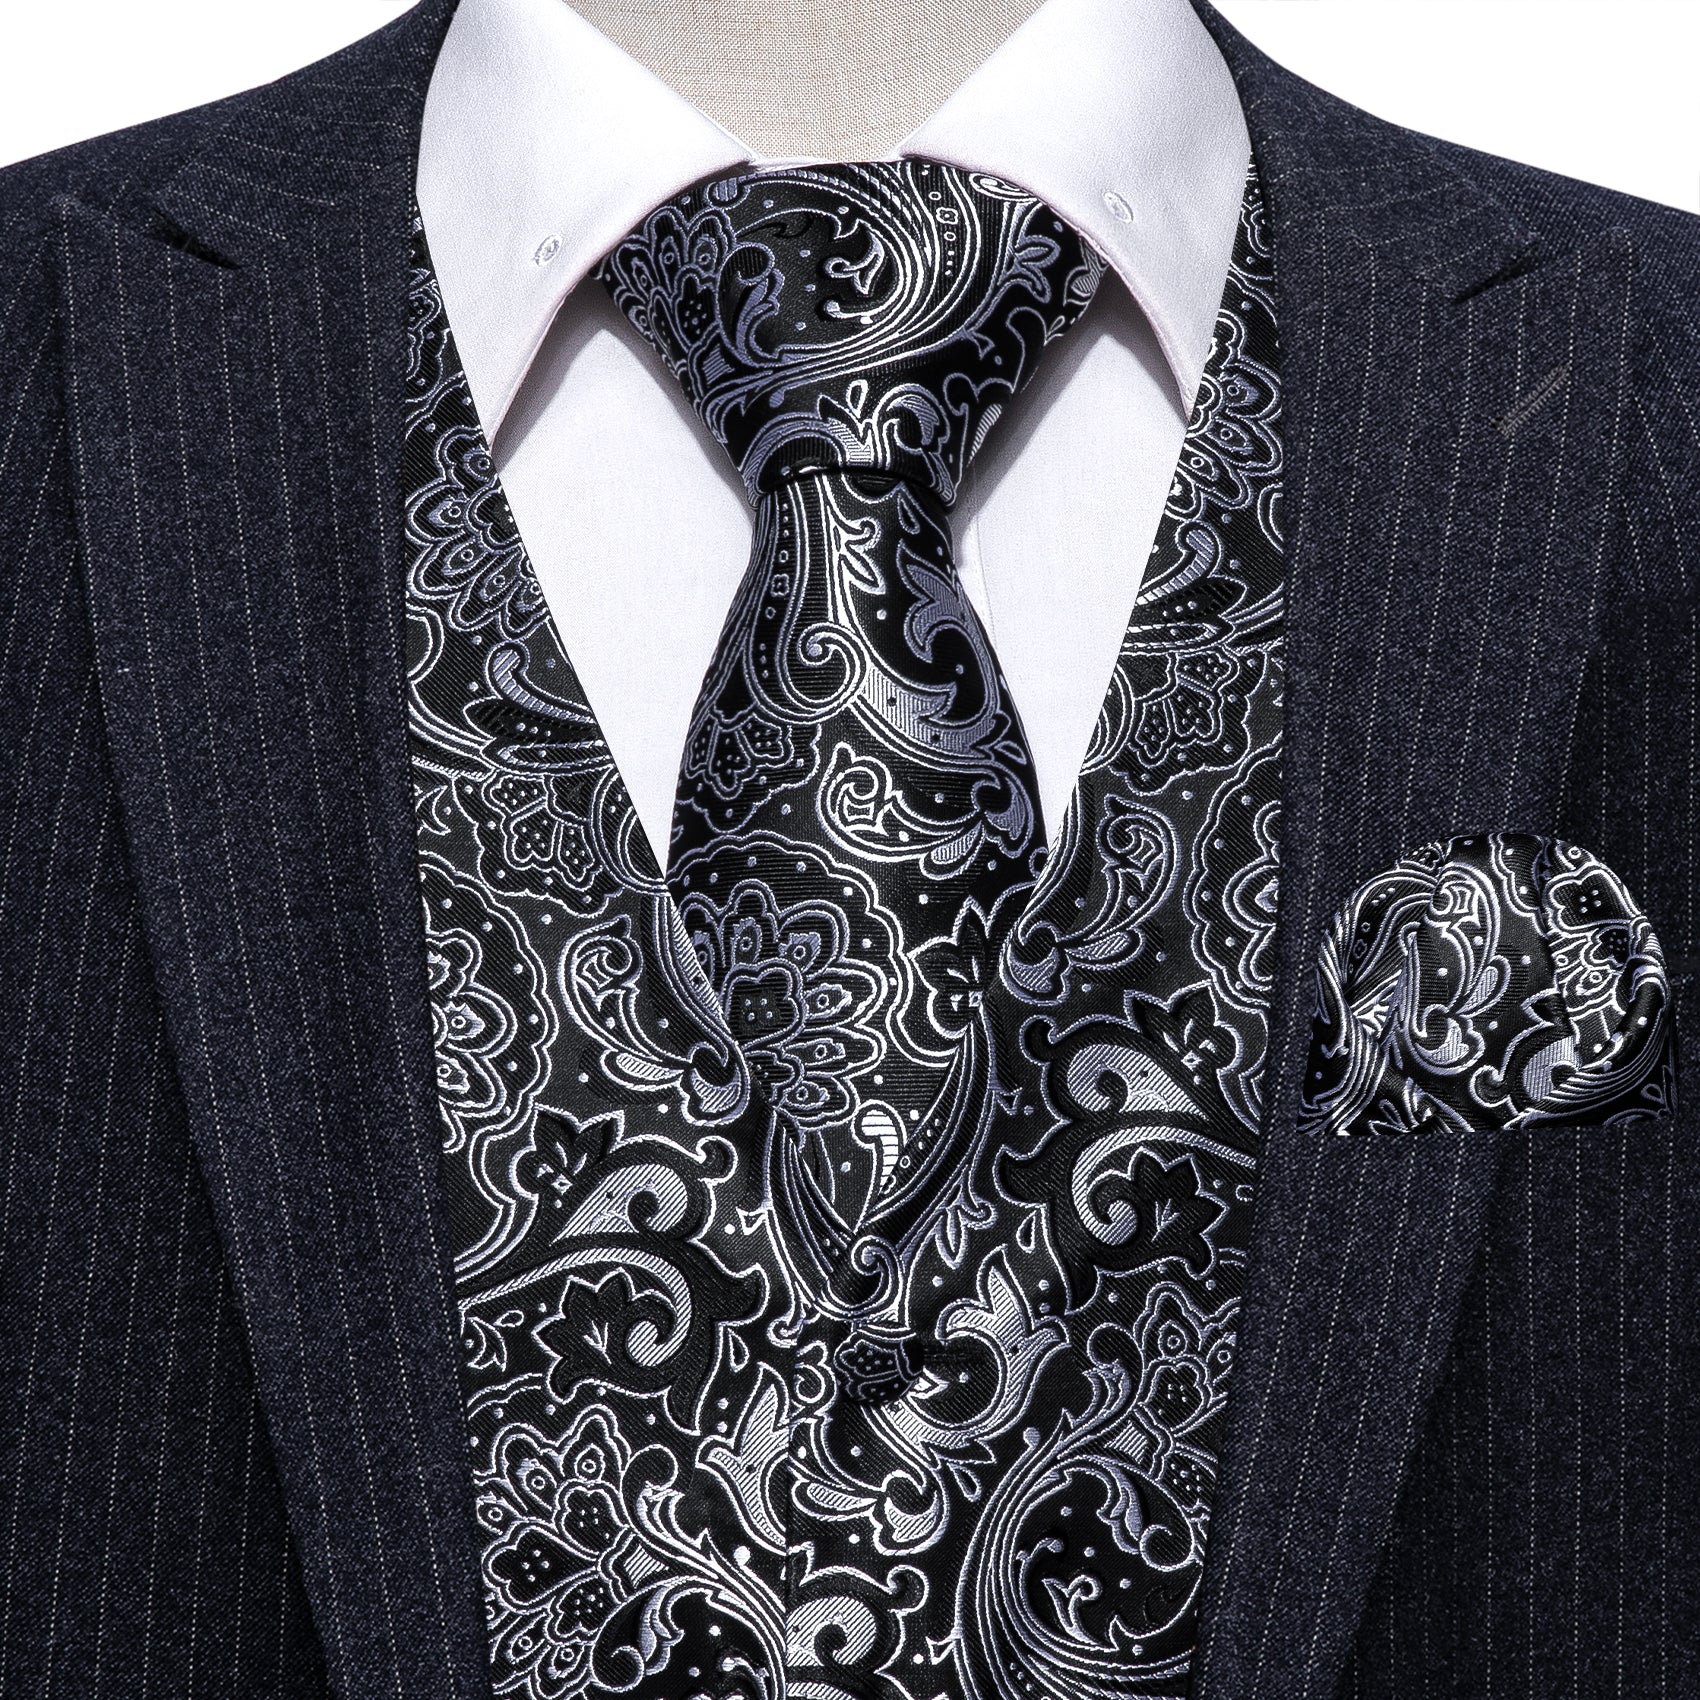 Black White Paisley Silk Vest Necktie Pocket Square Cufflinks Set